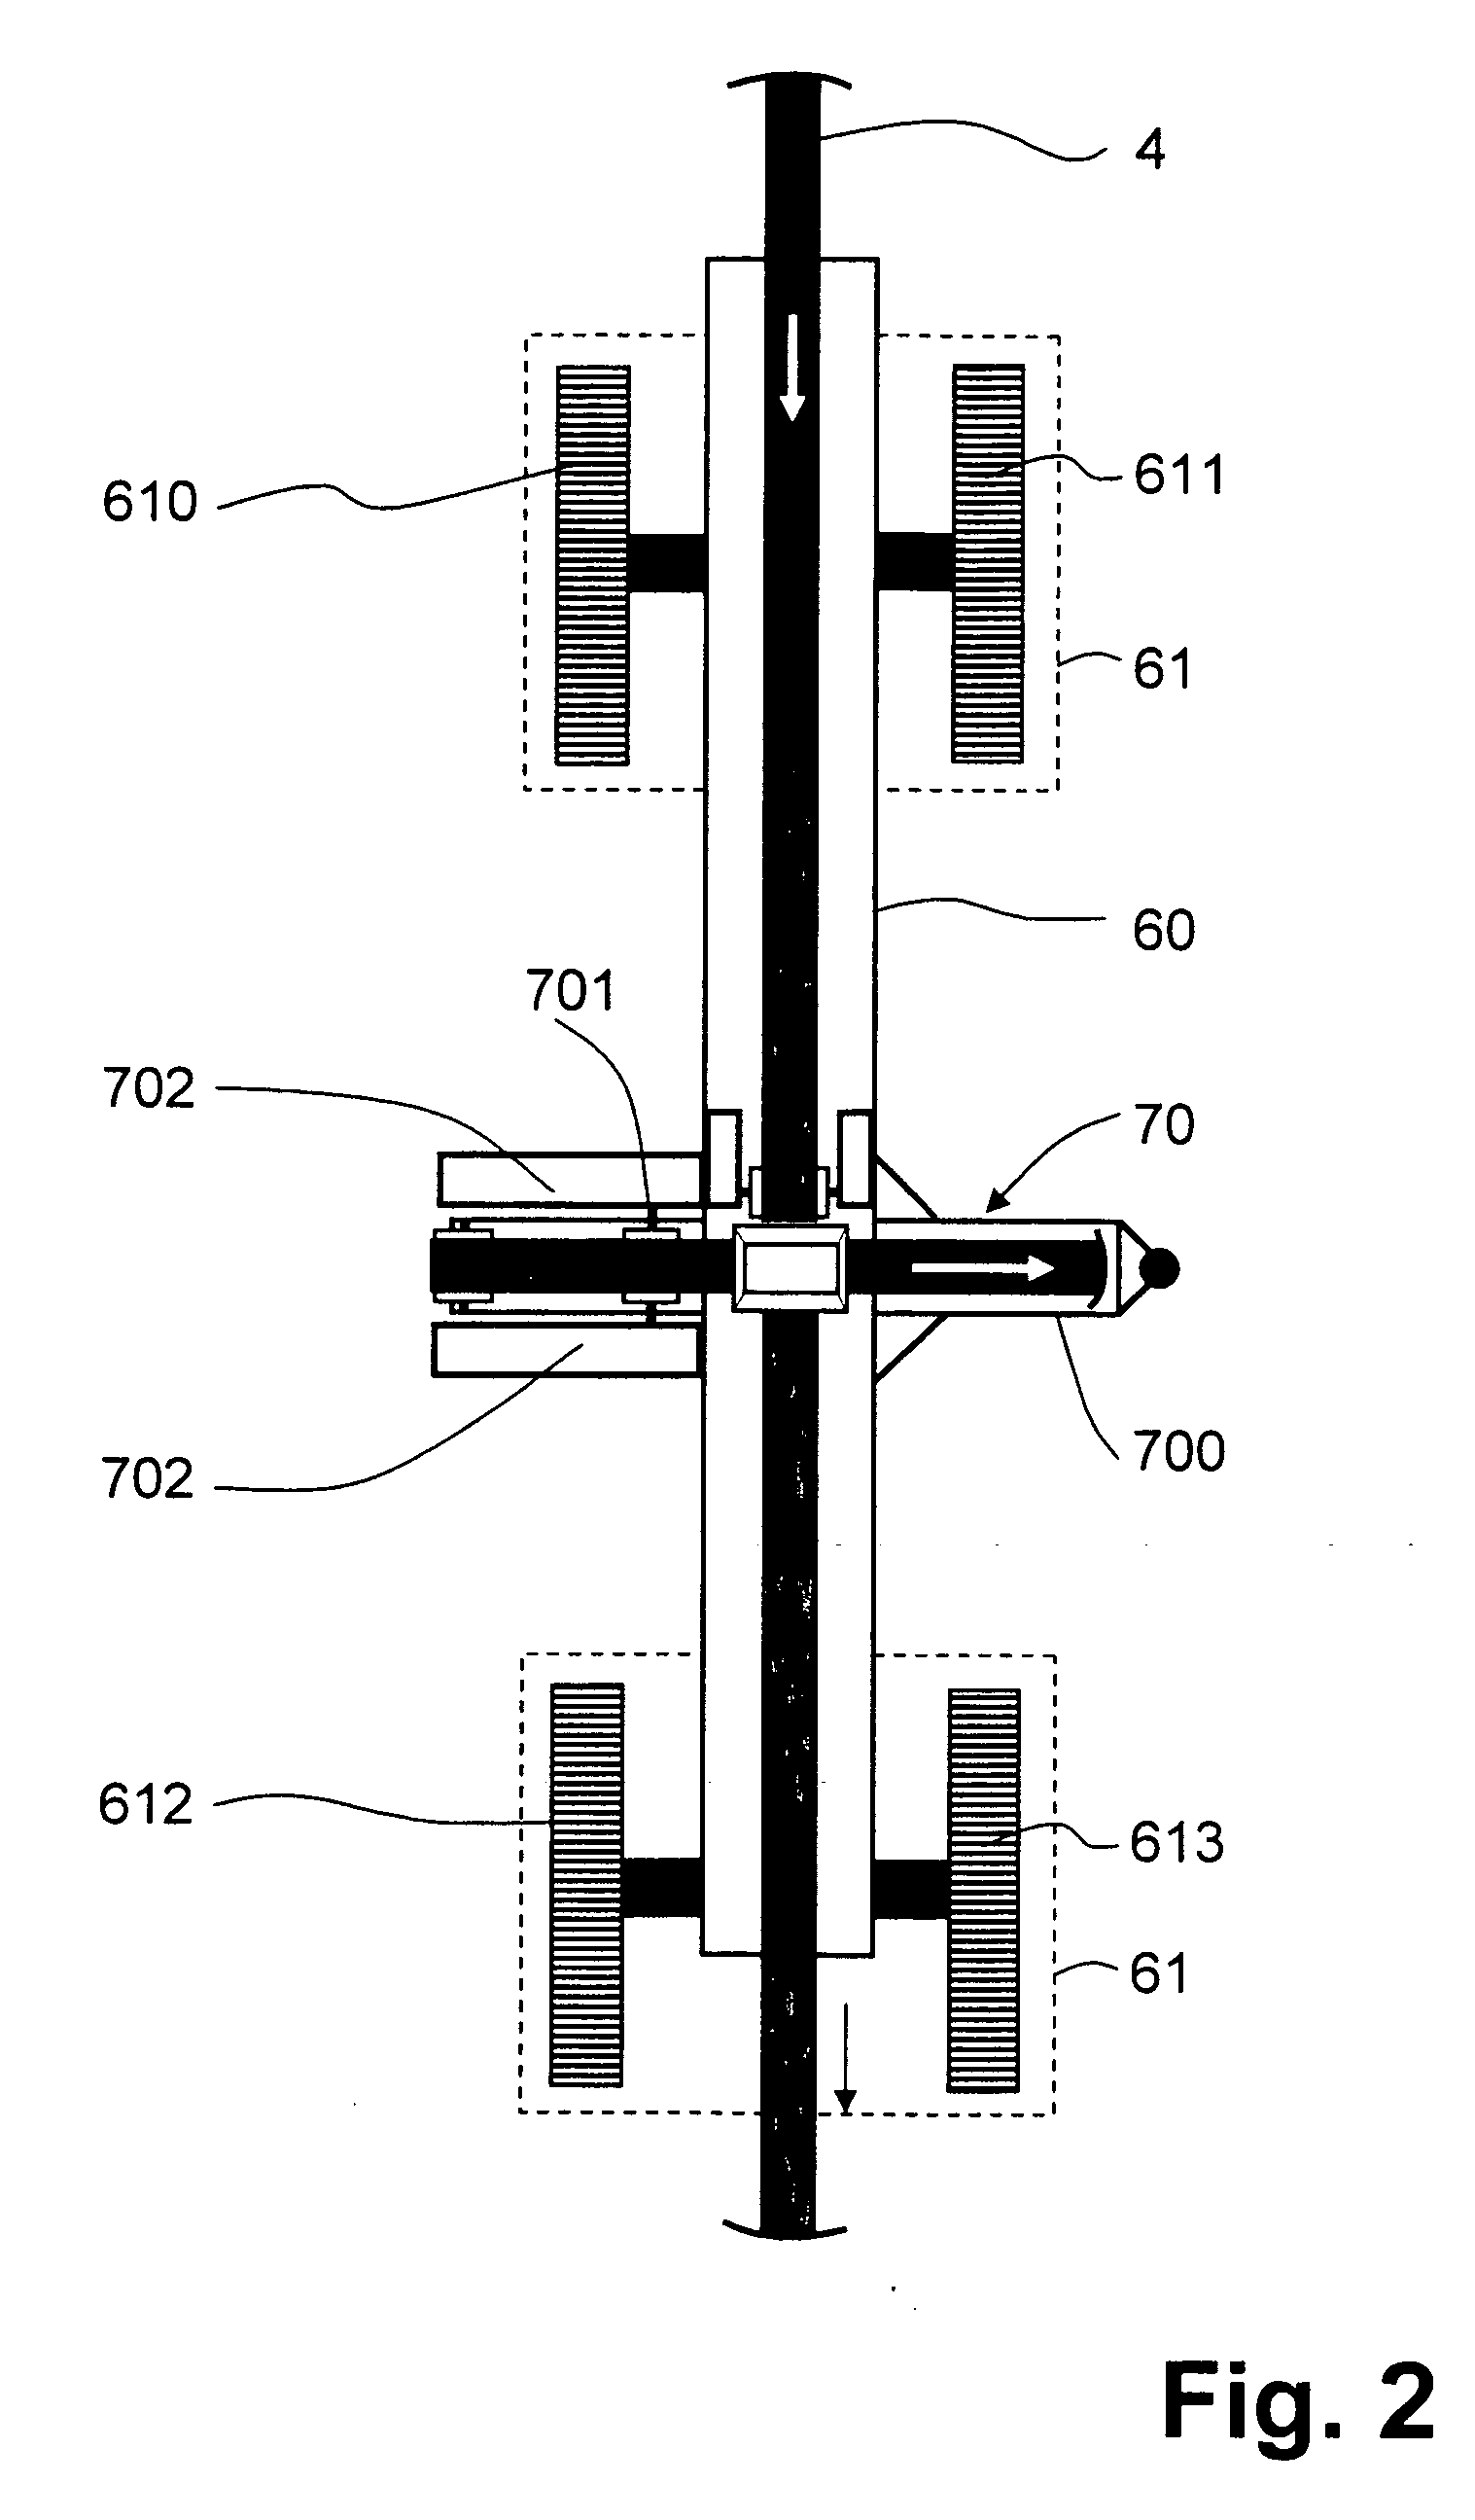 Movable belt conveyor system